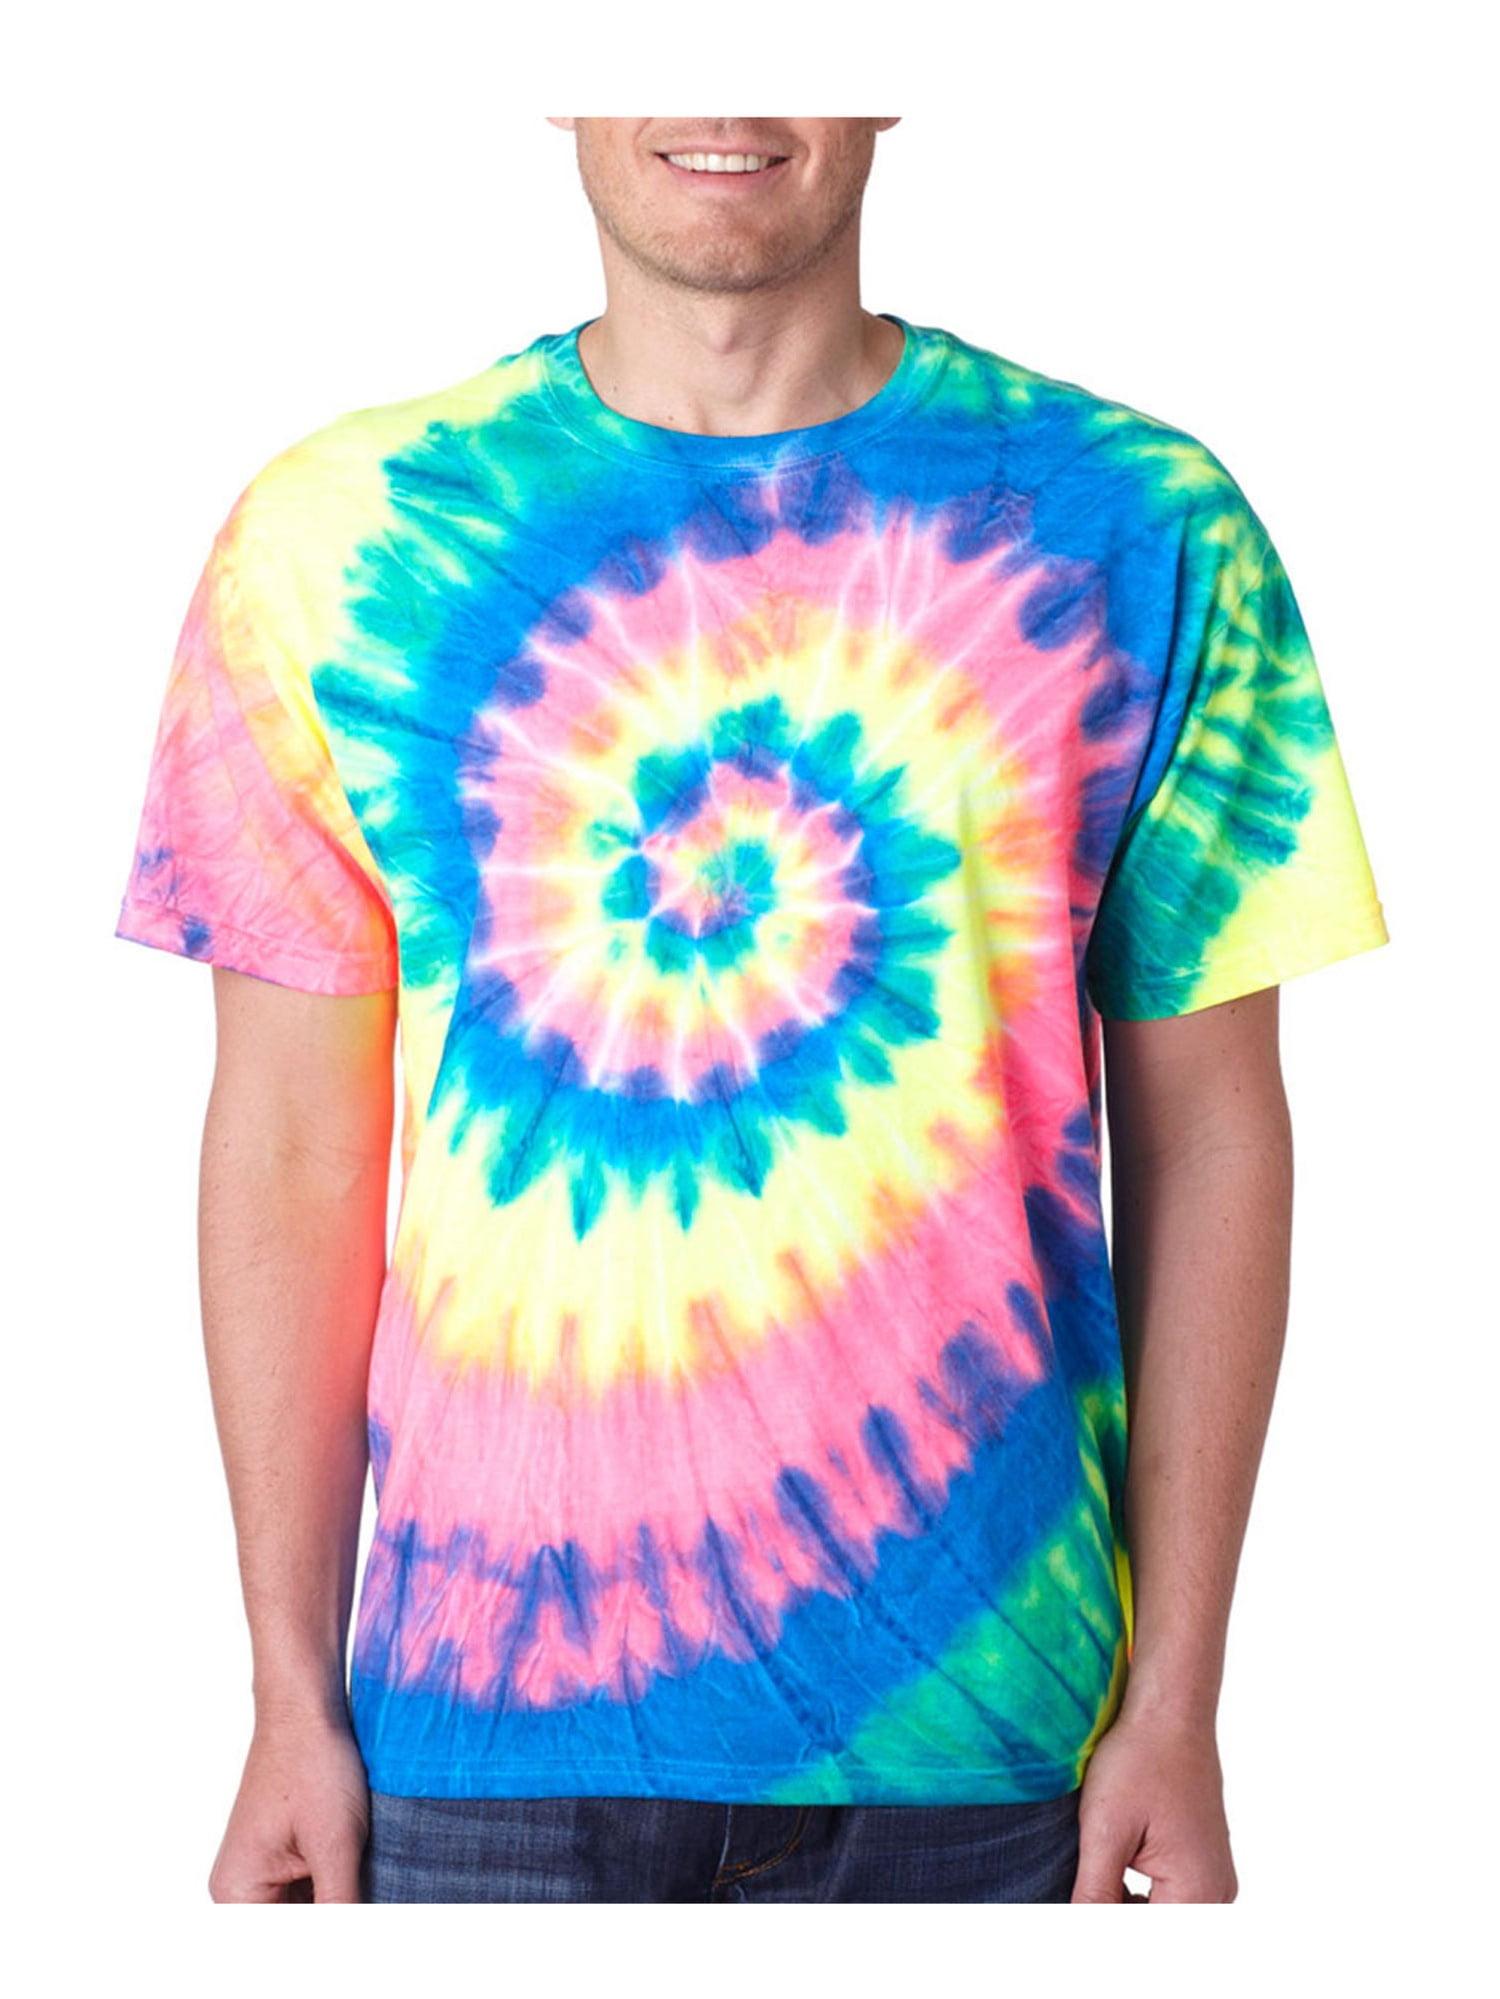 Swirl XL Tie Dye Shirt